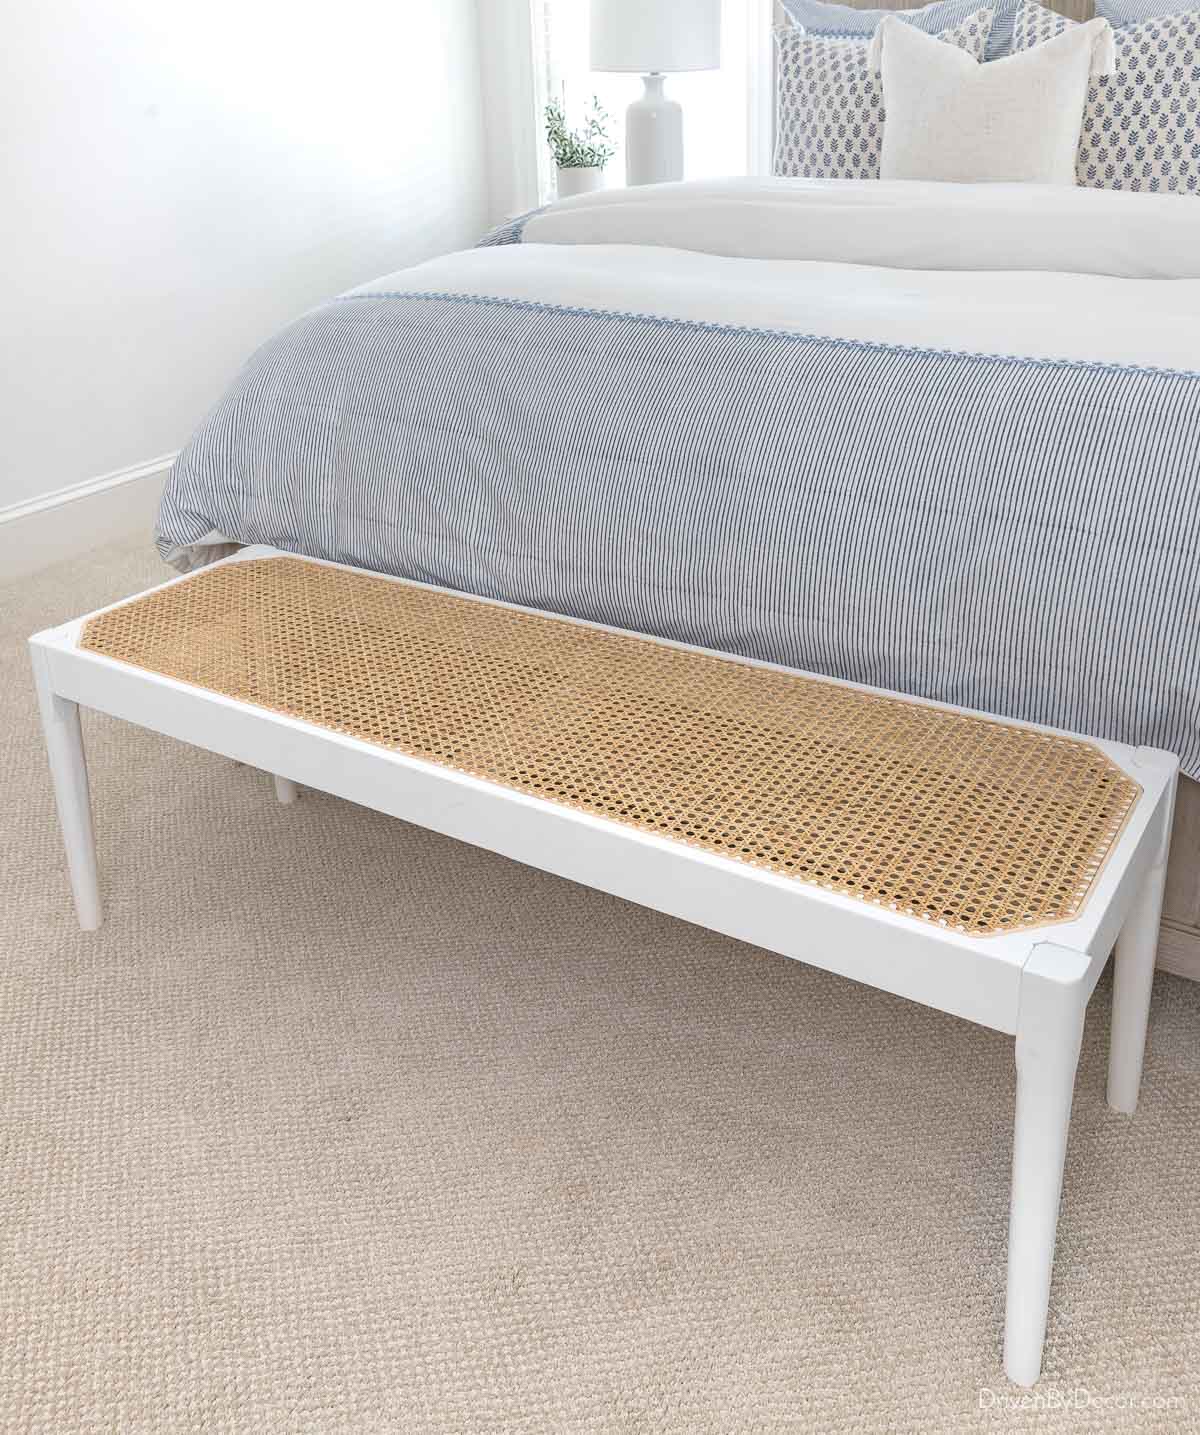 Cane bench at end of bed as a coastal bedroom decor idea